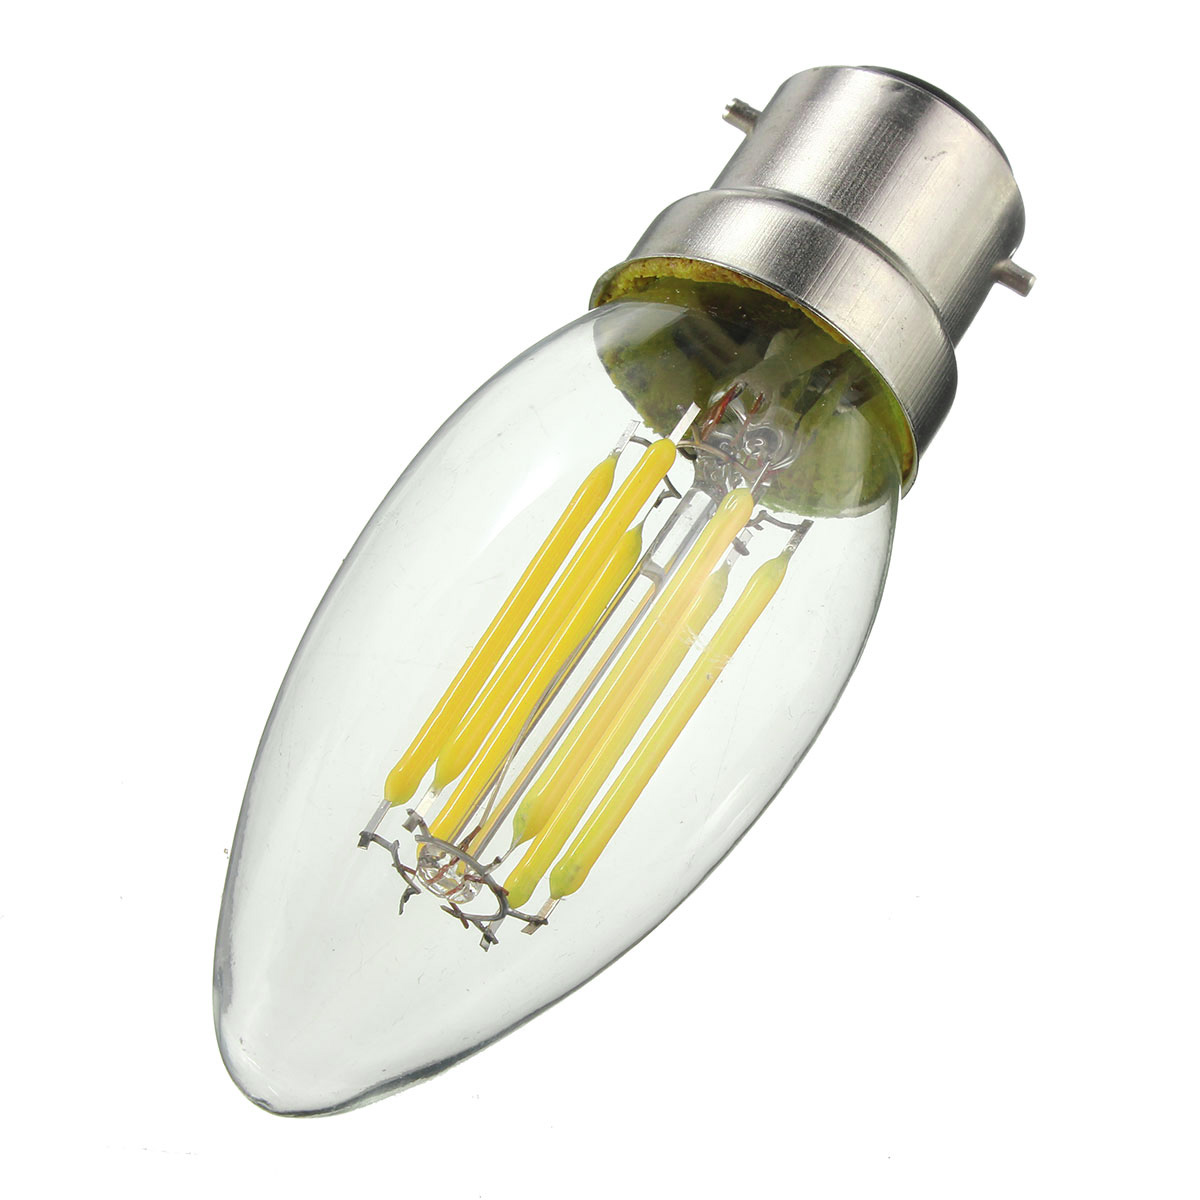 Dimmable-B22-C35-6W-COB-Pure-White-Warm-White-Edison-Retro-Light-Lamp-Bulb-AC220V-1069706-10